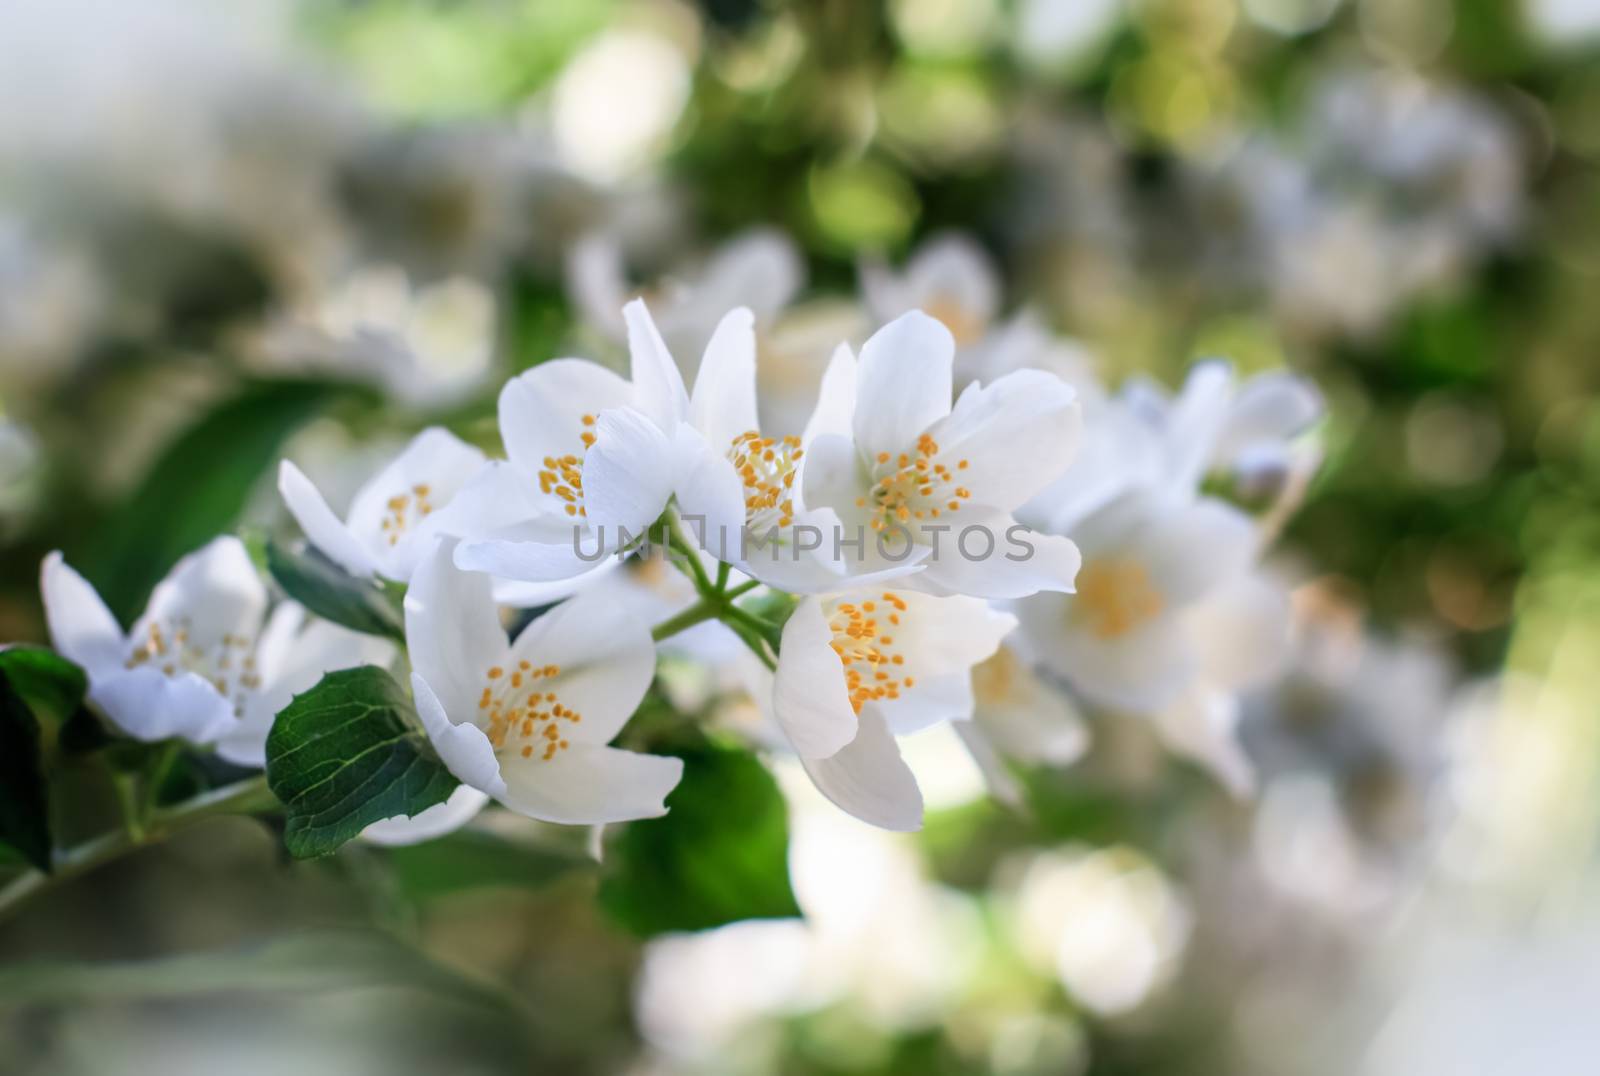 Jasmine flowers on shrub blossom by Angel_a